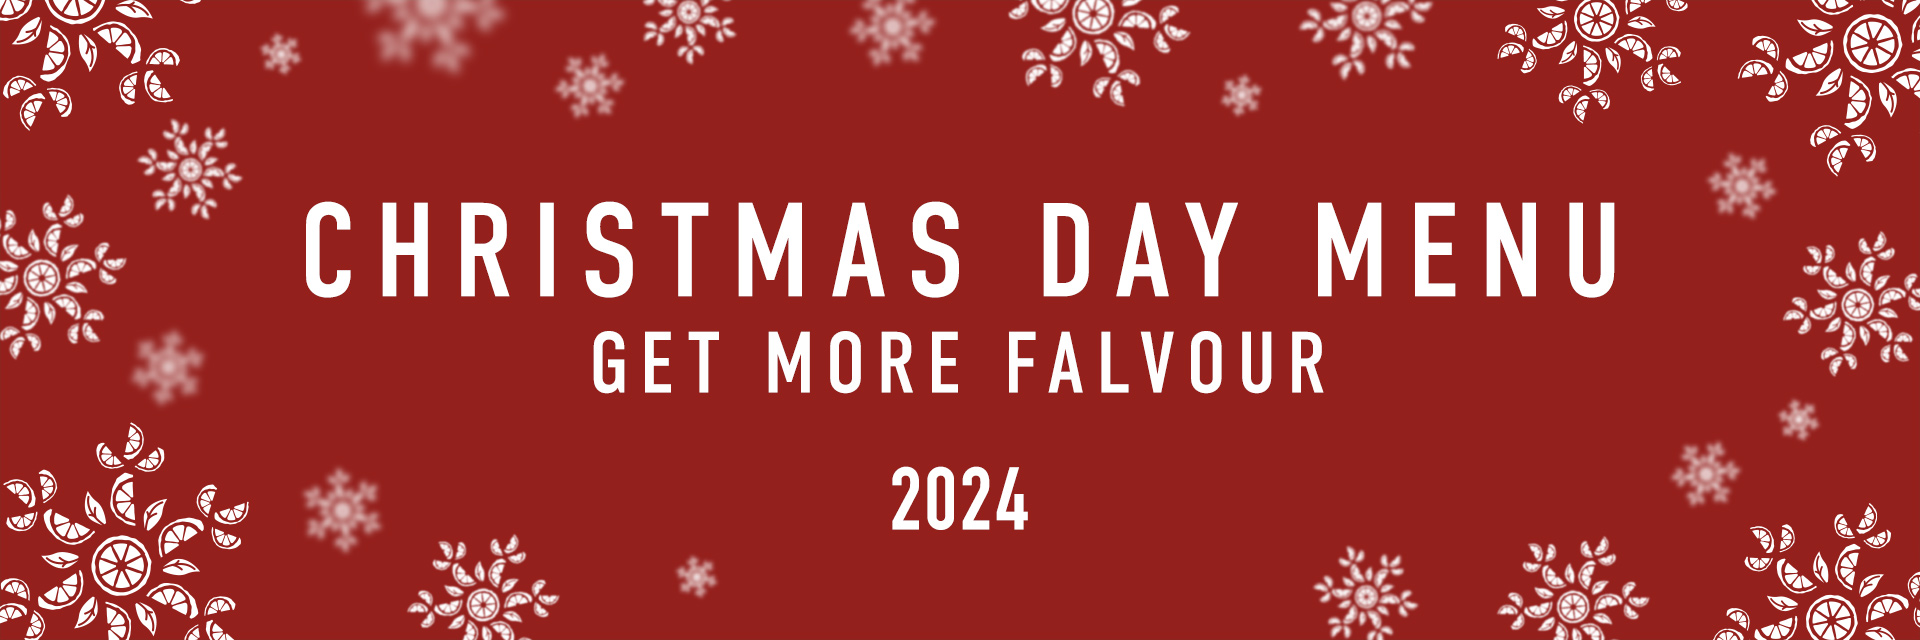 The Redgrove Christmas Day Menu 2024  - Harvester 